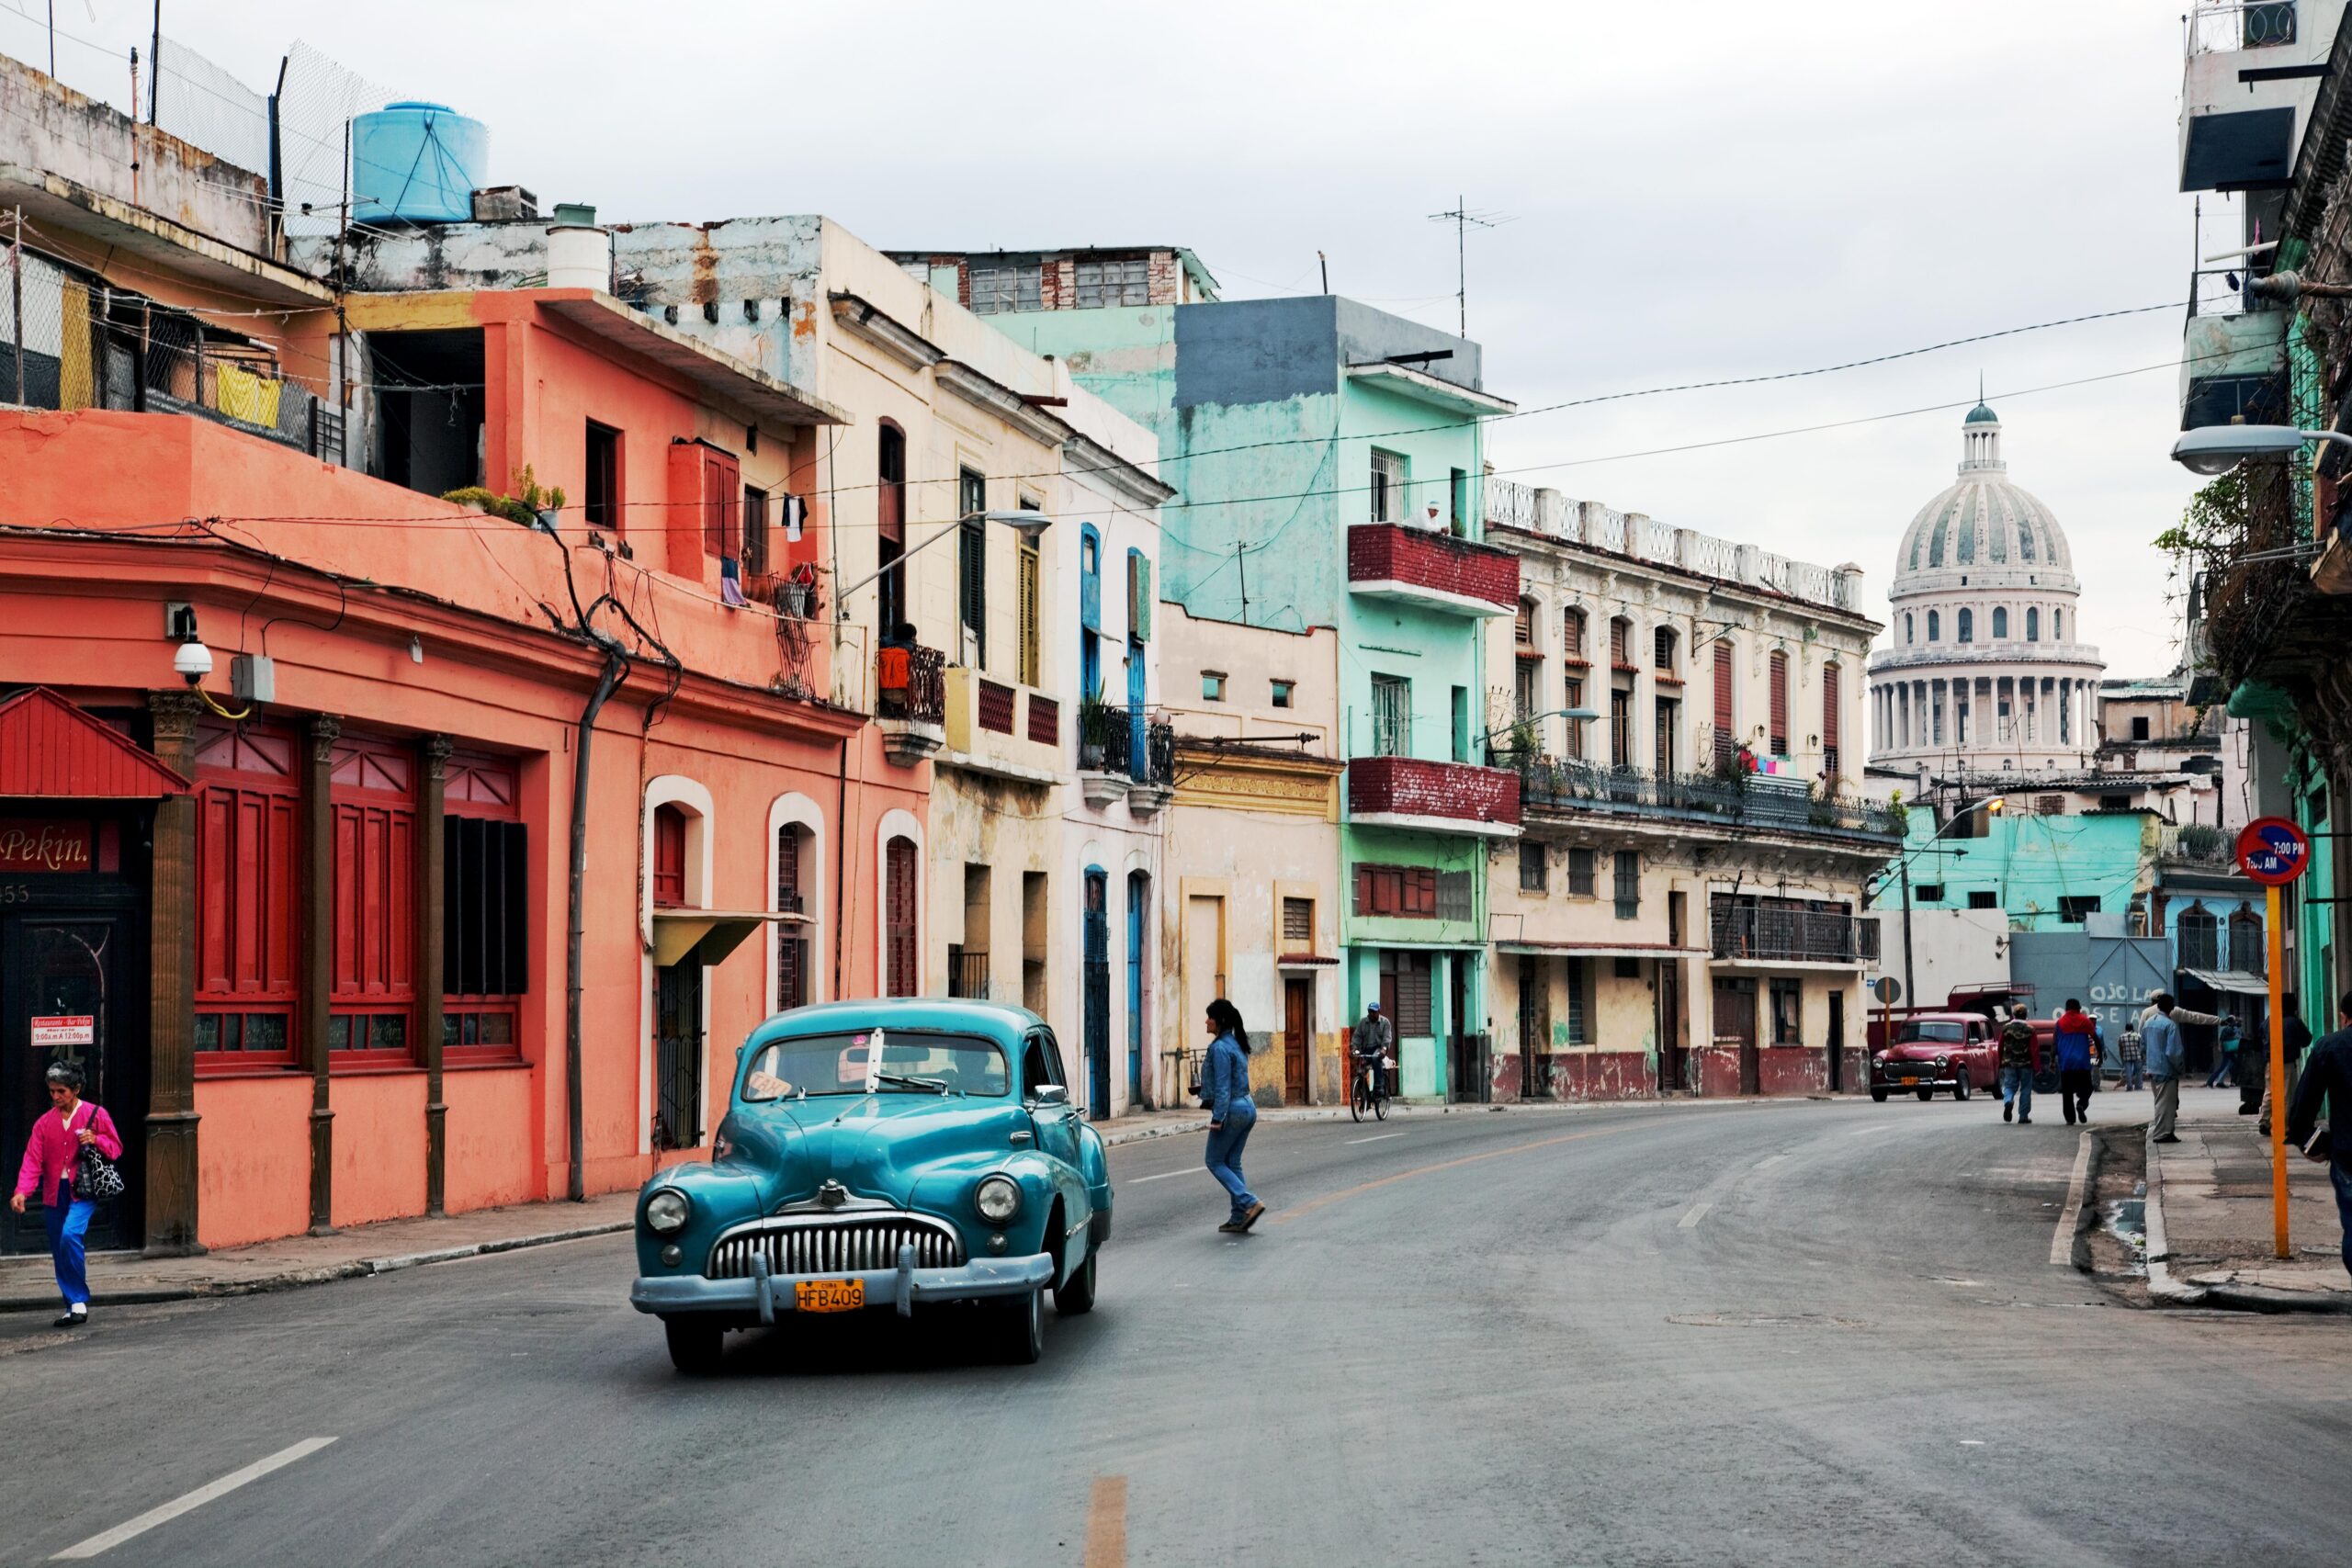 Experience Cuba with API!